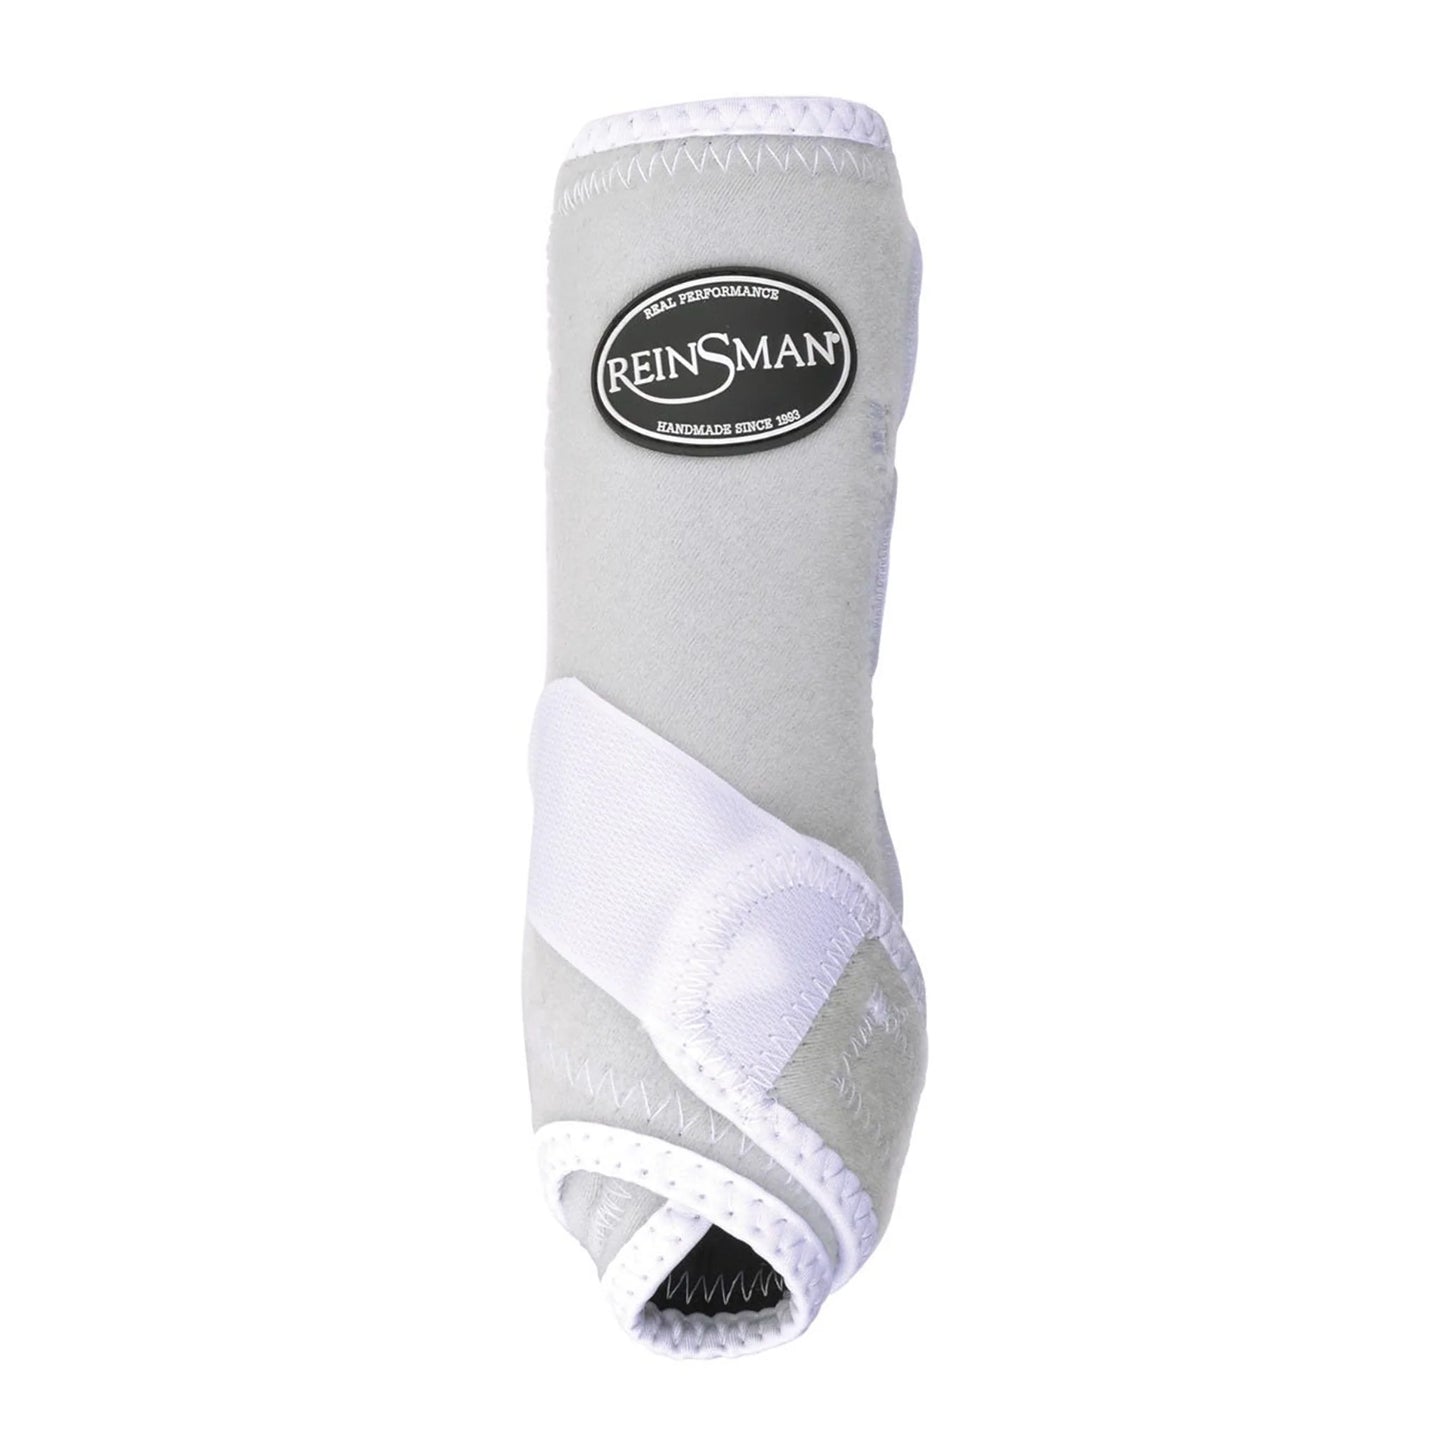 Reinsman Apex Sports Boots 4 Pack - White - Medium - CYRE9127WH